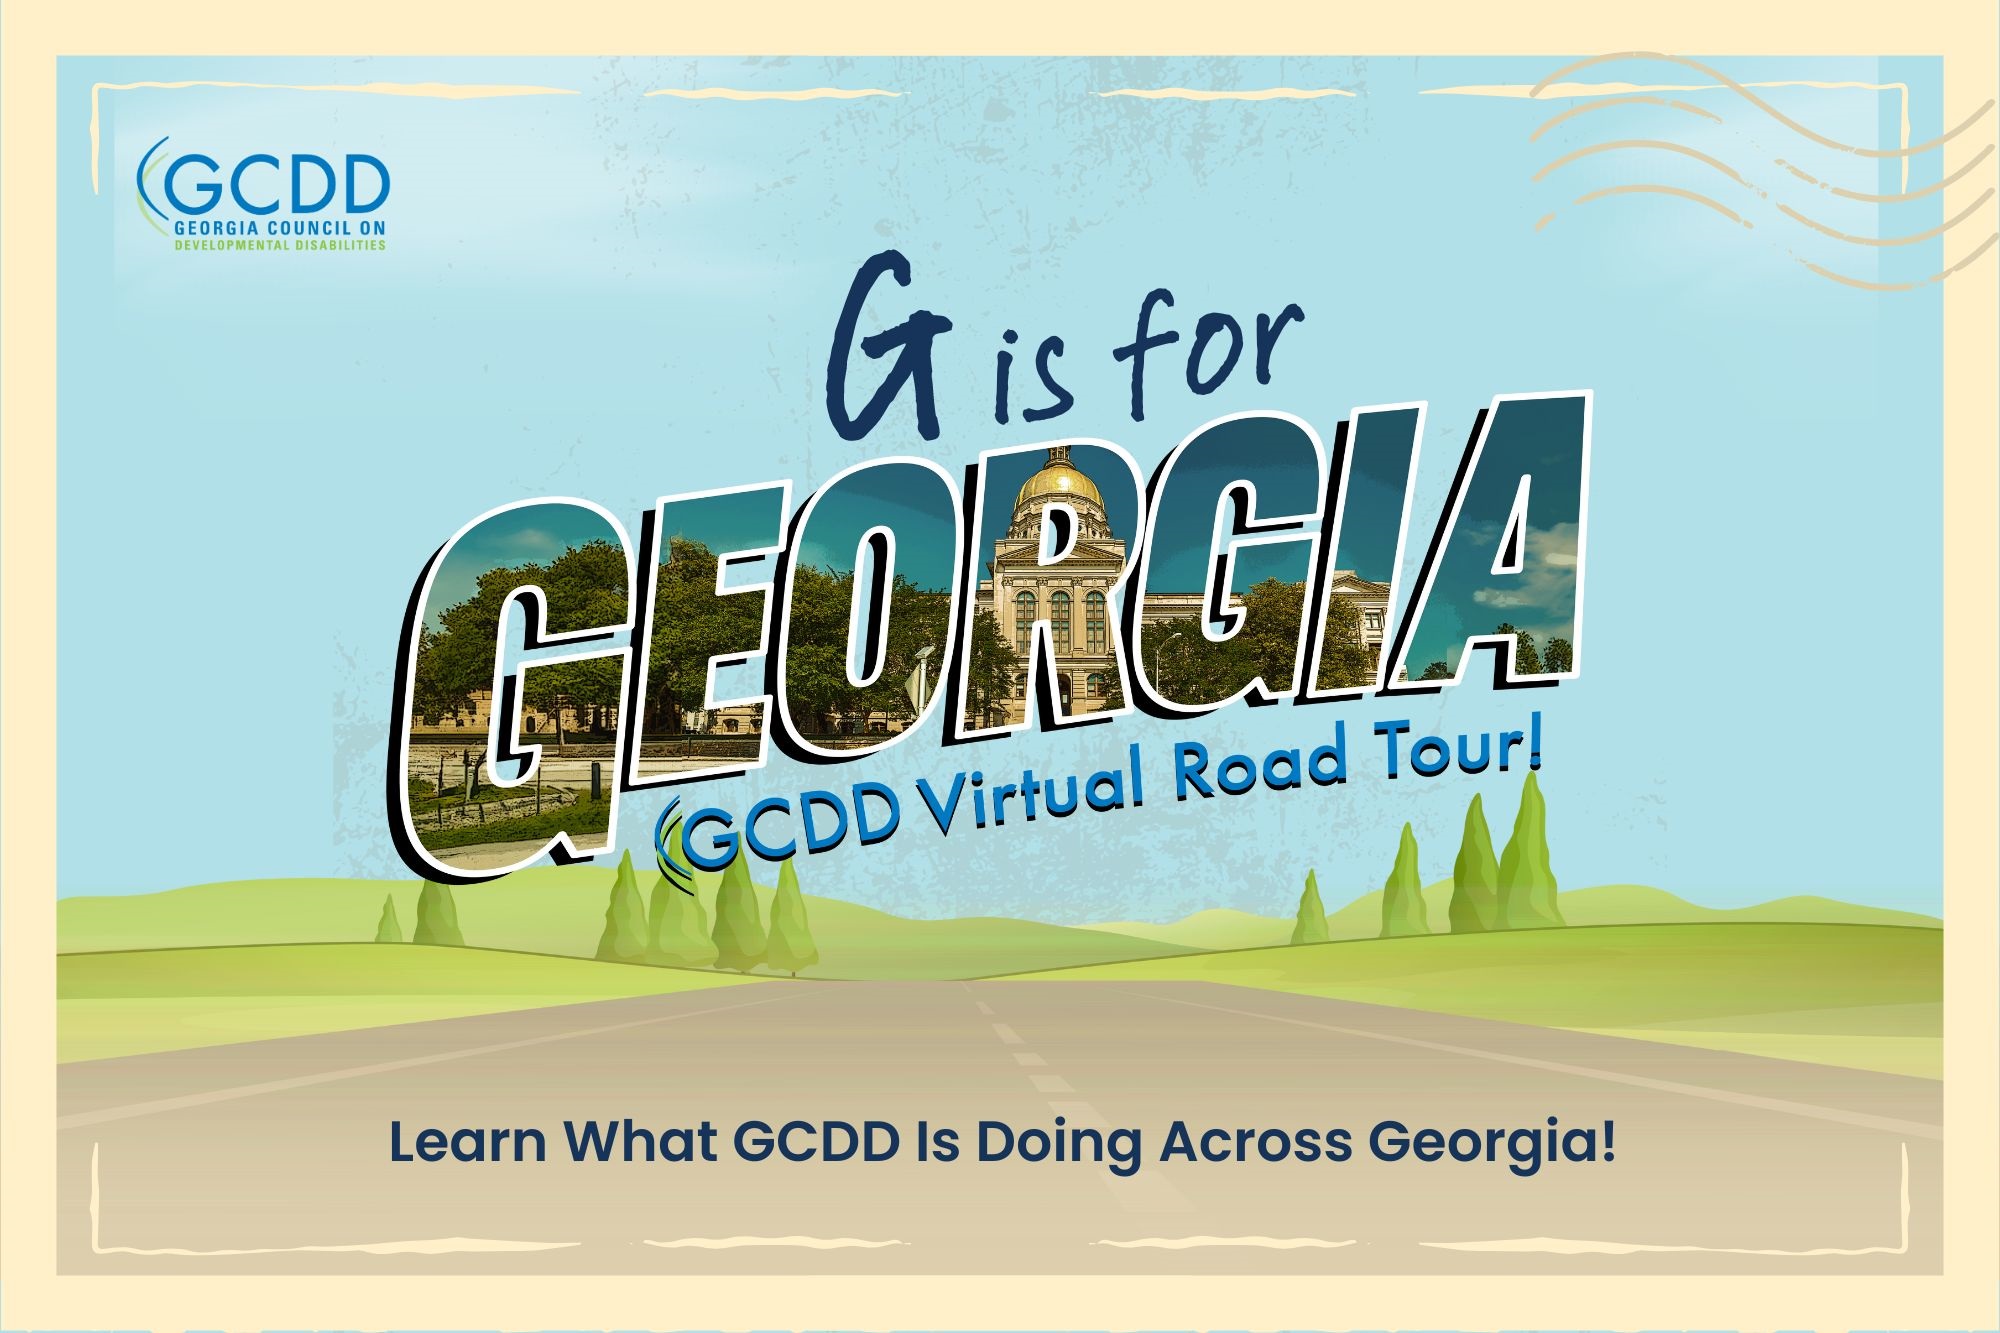 G is for Georgia - GCDD Virtual Road Tour